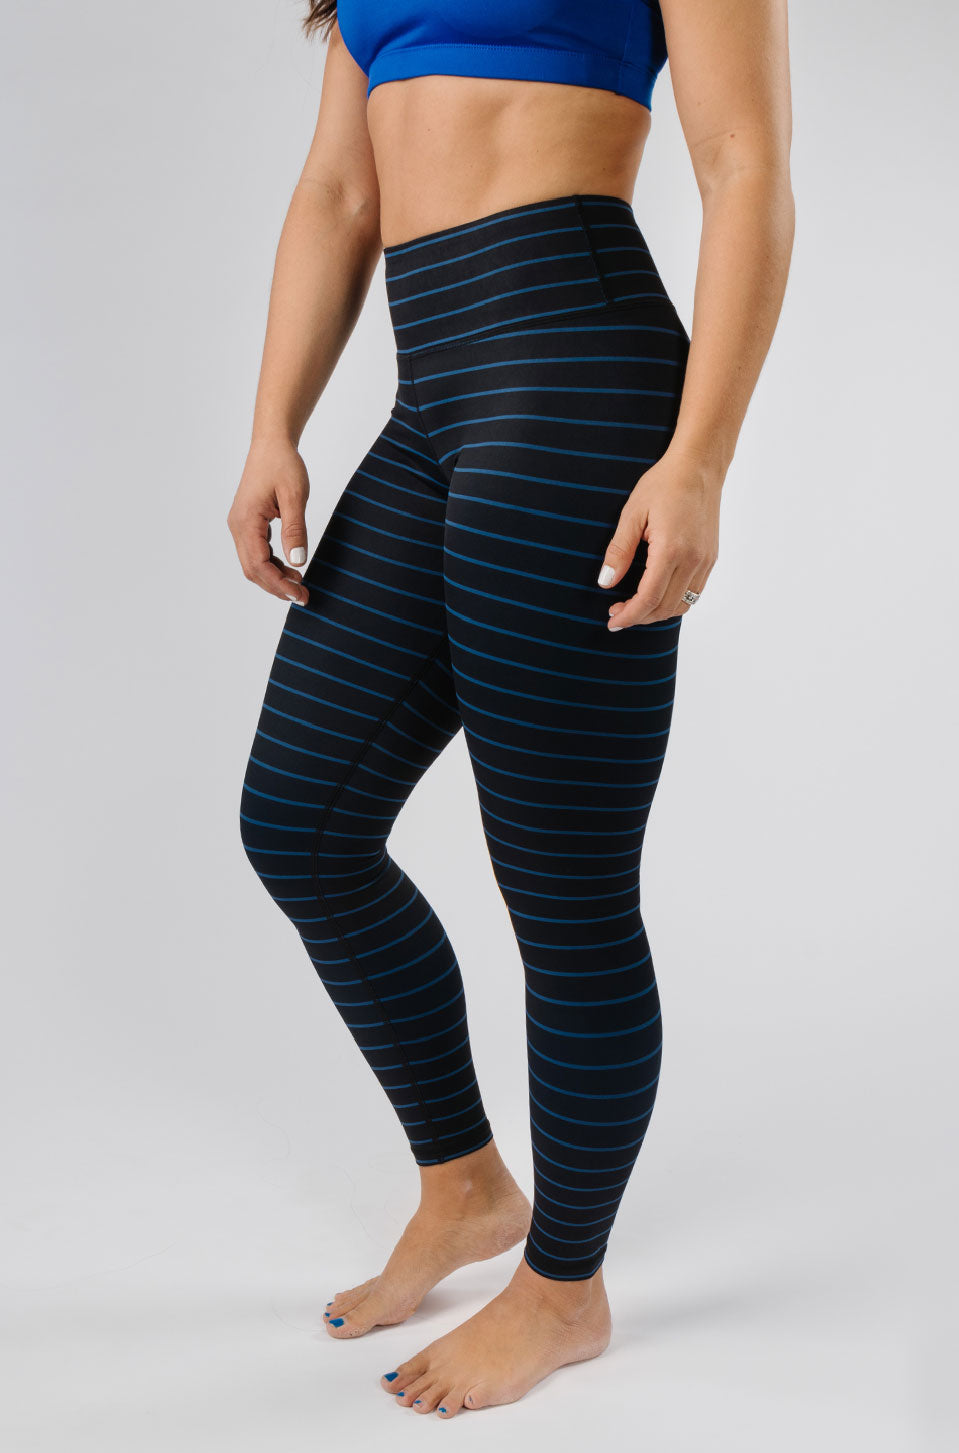 Image of Striped Capri & Legging in Black and Blue